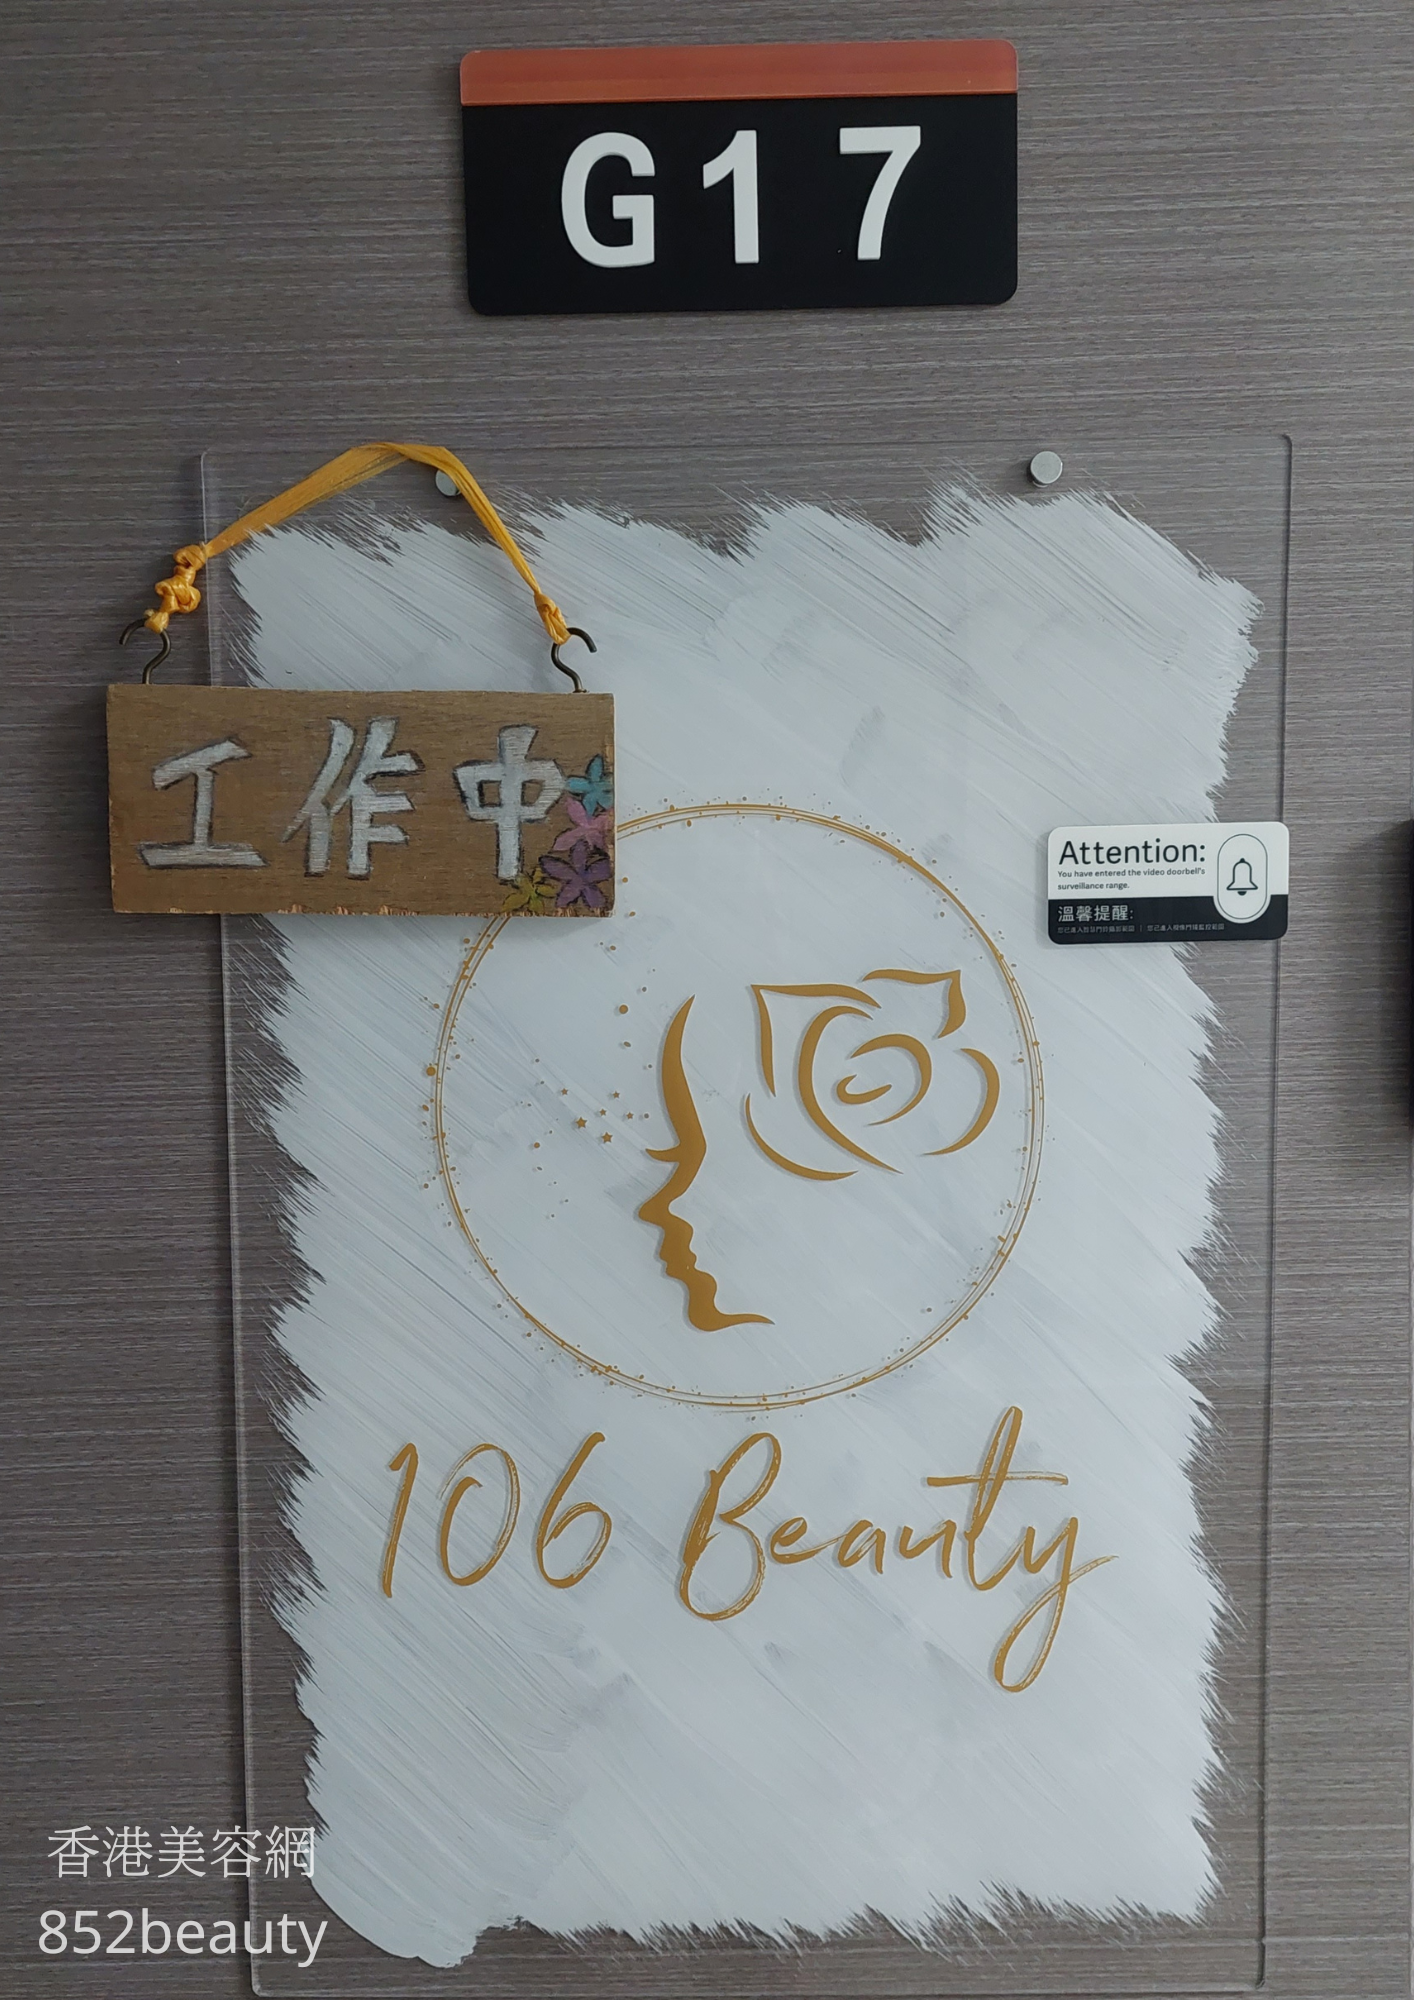 美容院 Beauty Salon: 106 Beauty